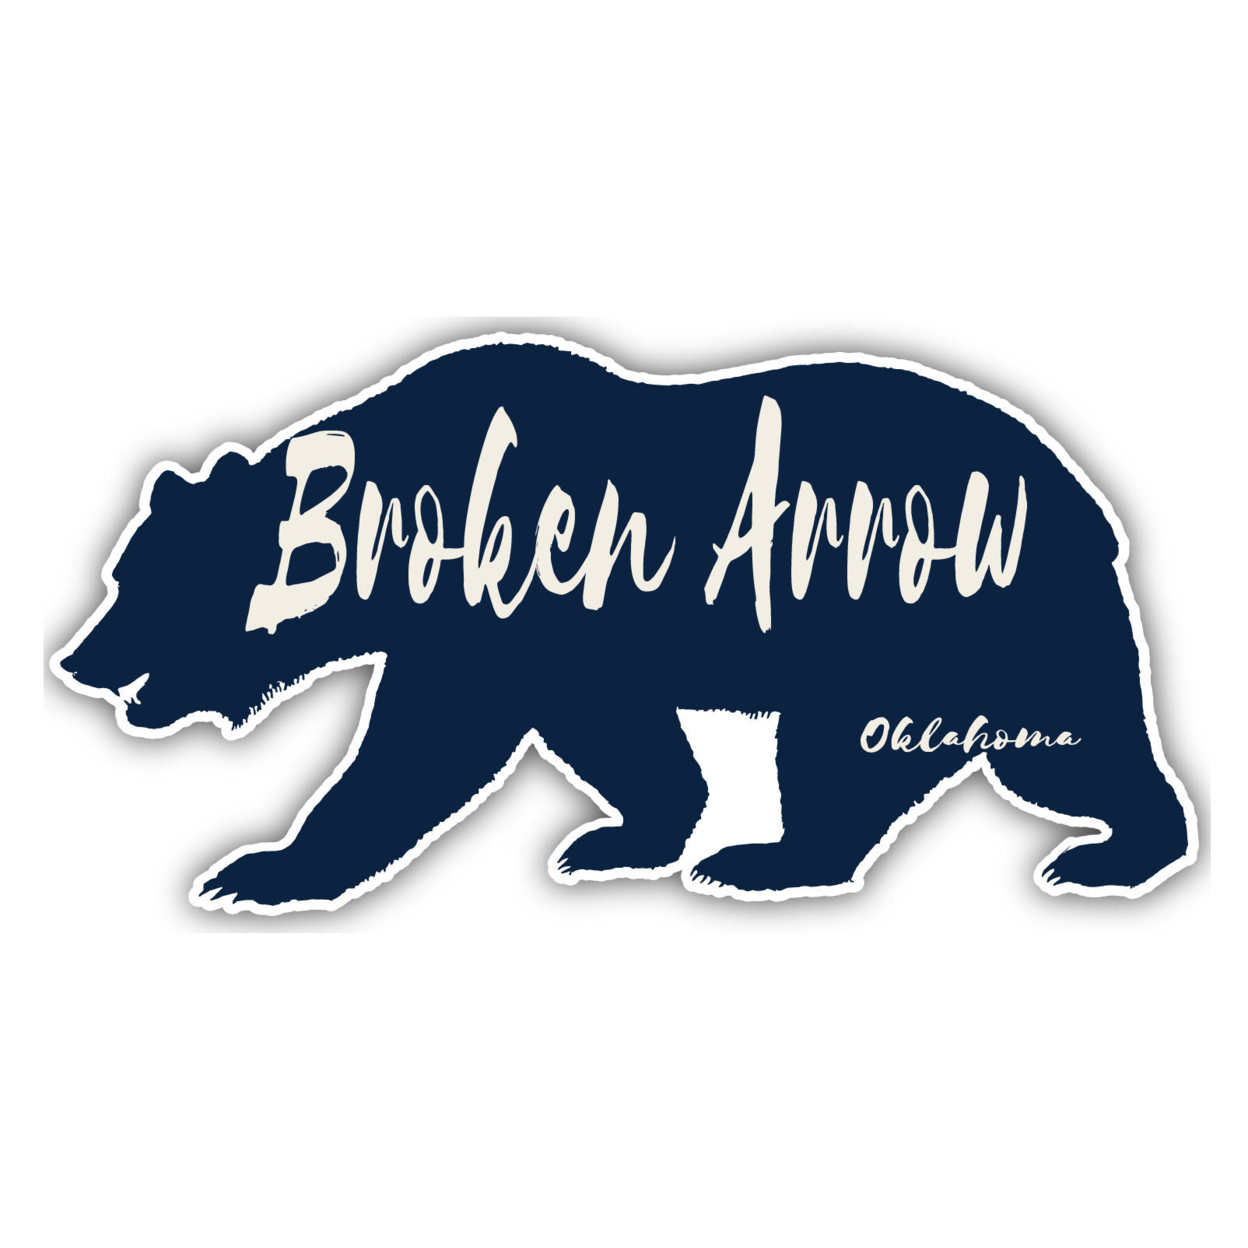 Broken Arrow Oklahoma Souvenir Decorative Stickers (Choose Theme And Size) - Single Unit, 8-Inch, Great Outdoors